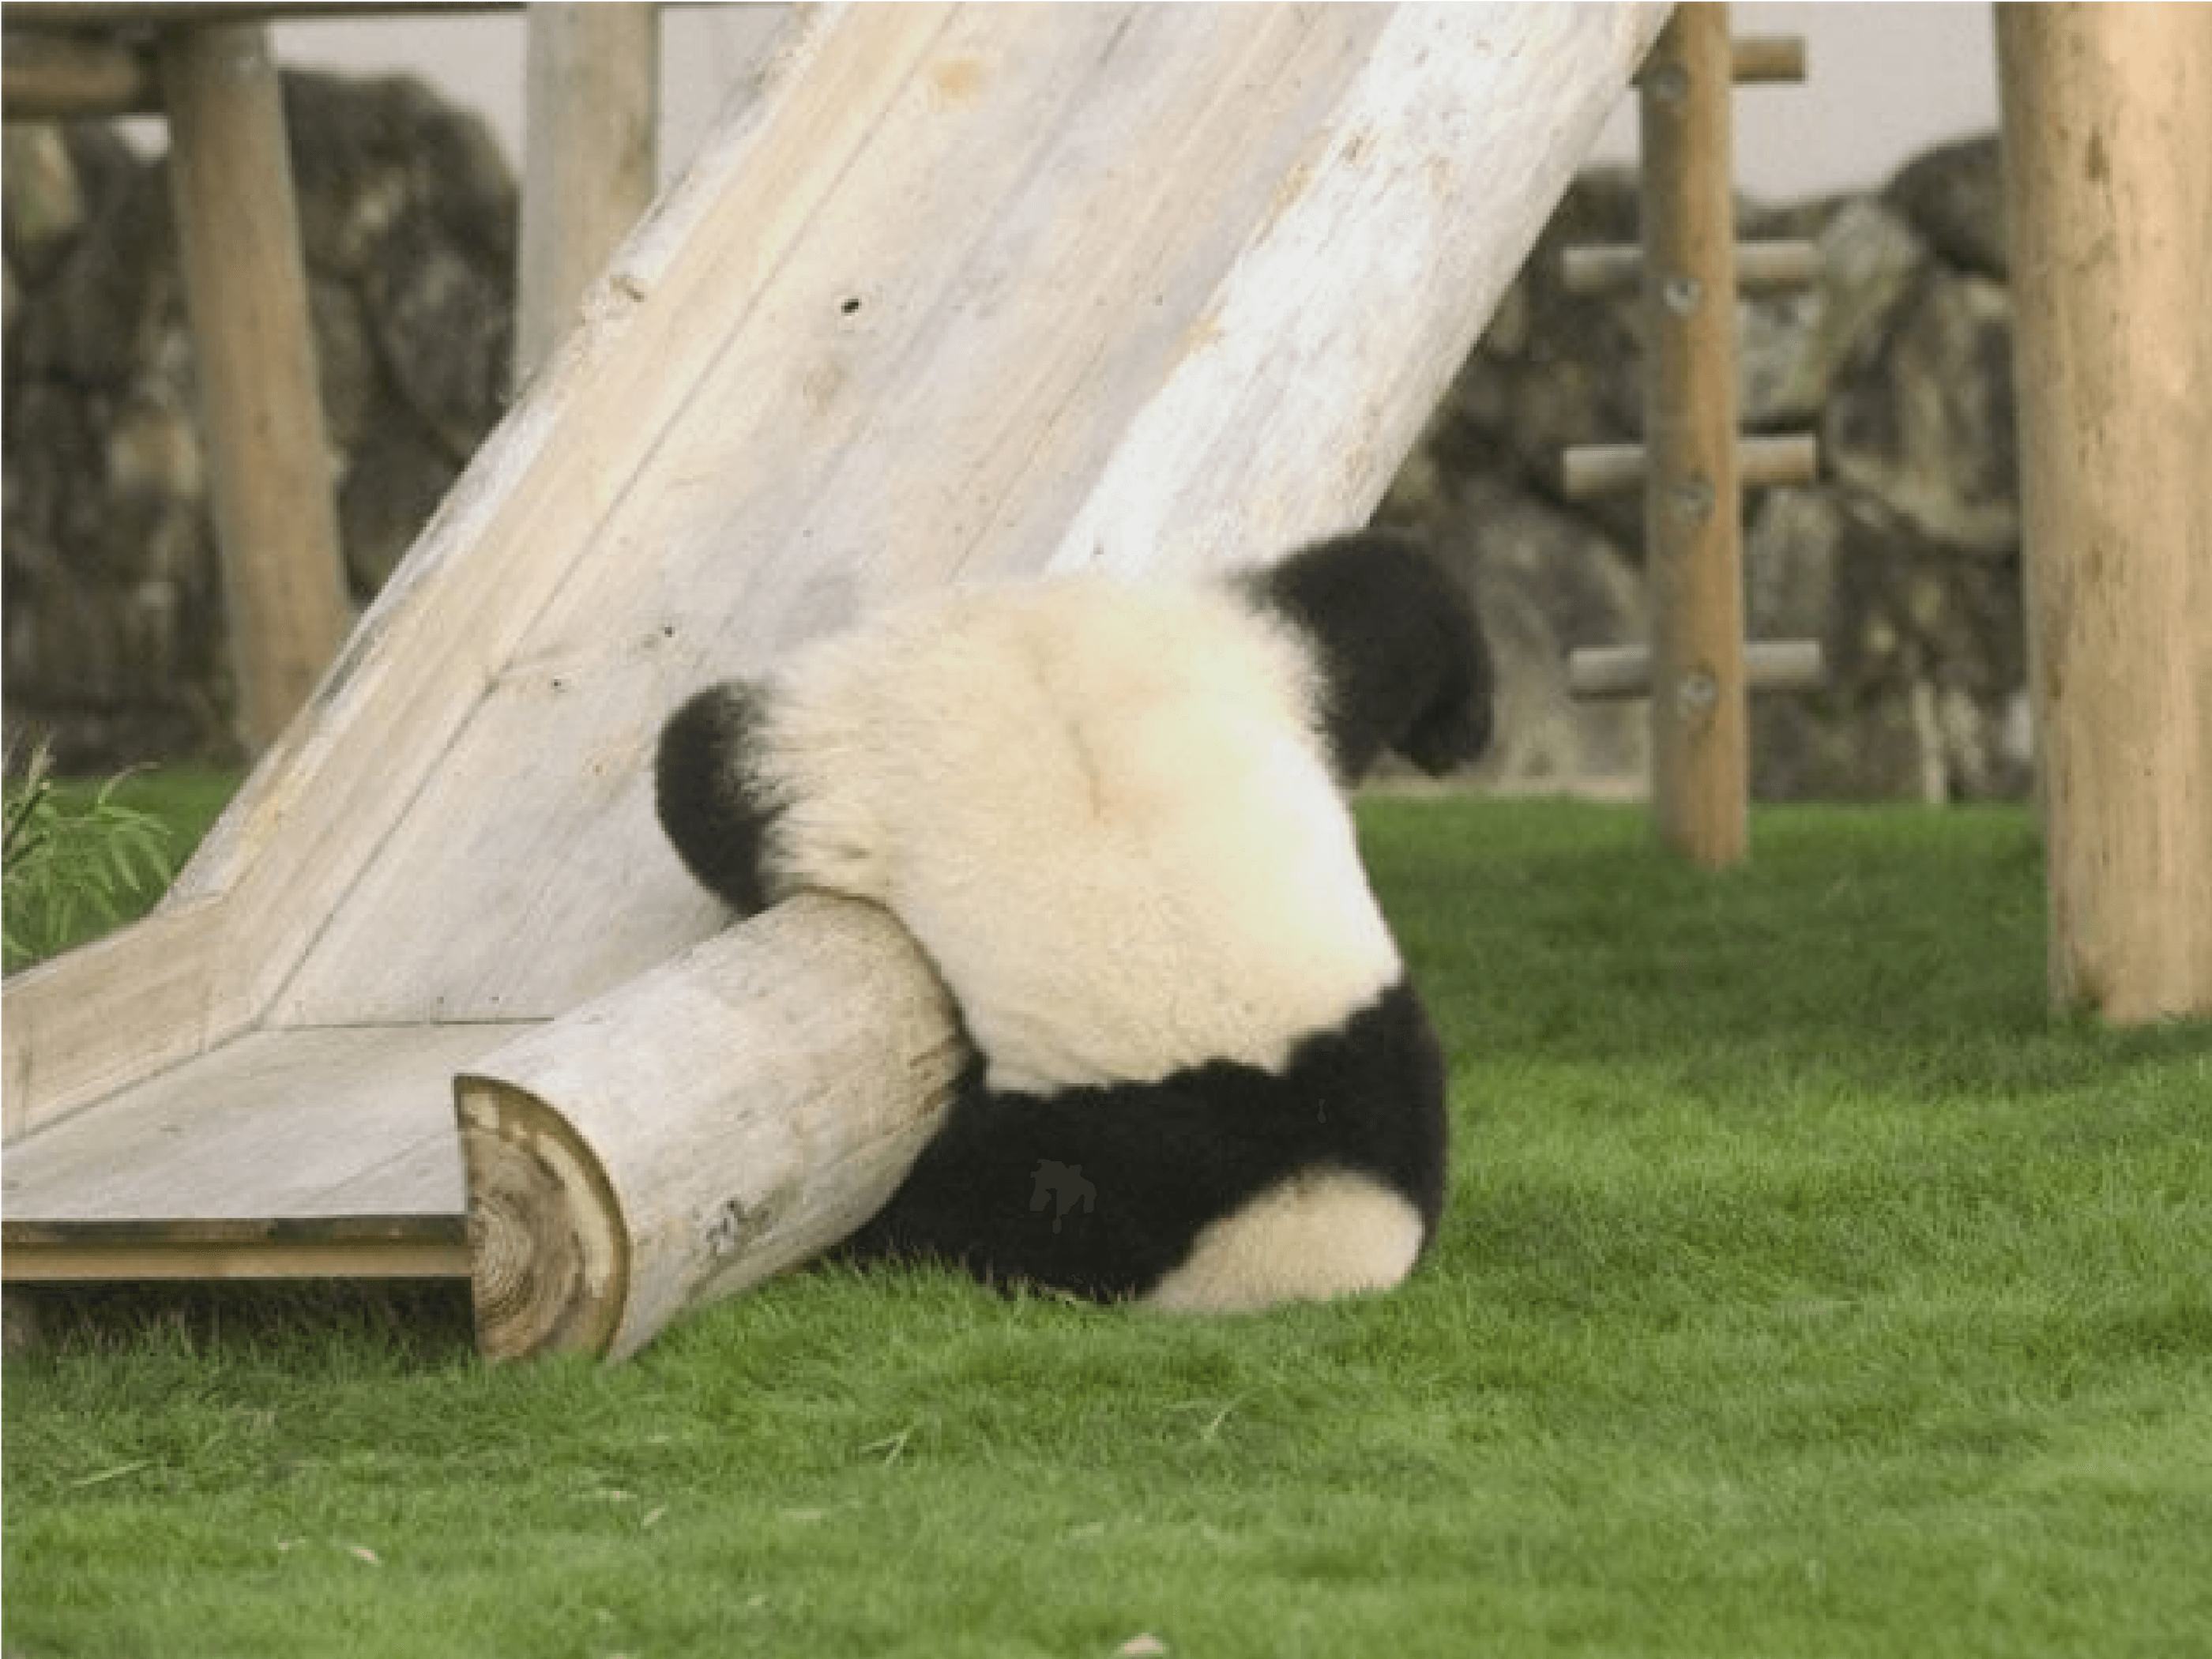 Image of a panda